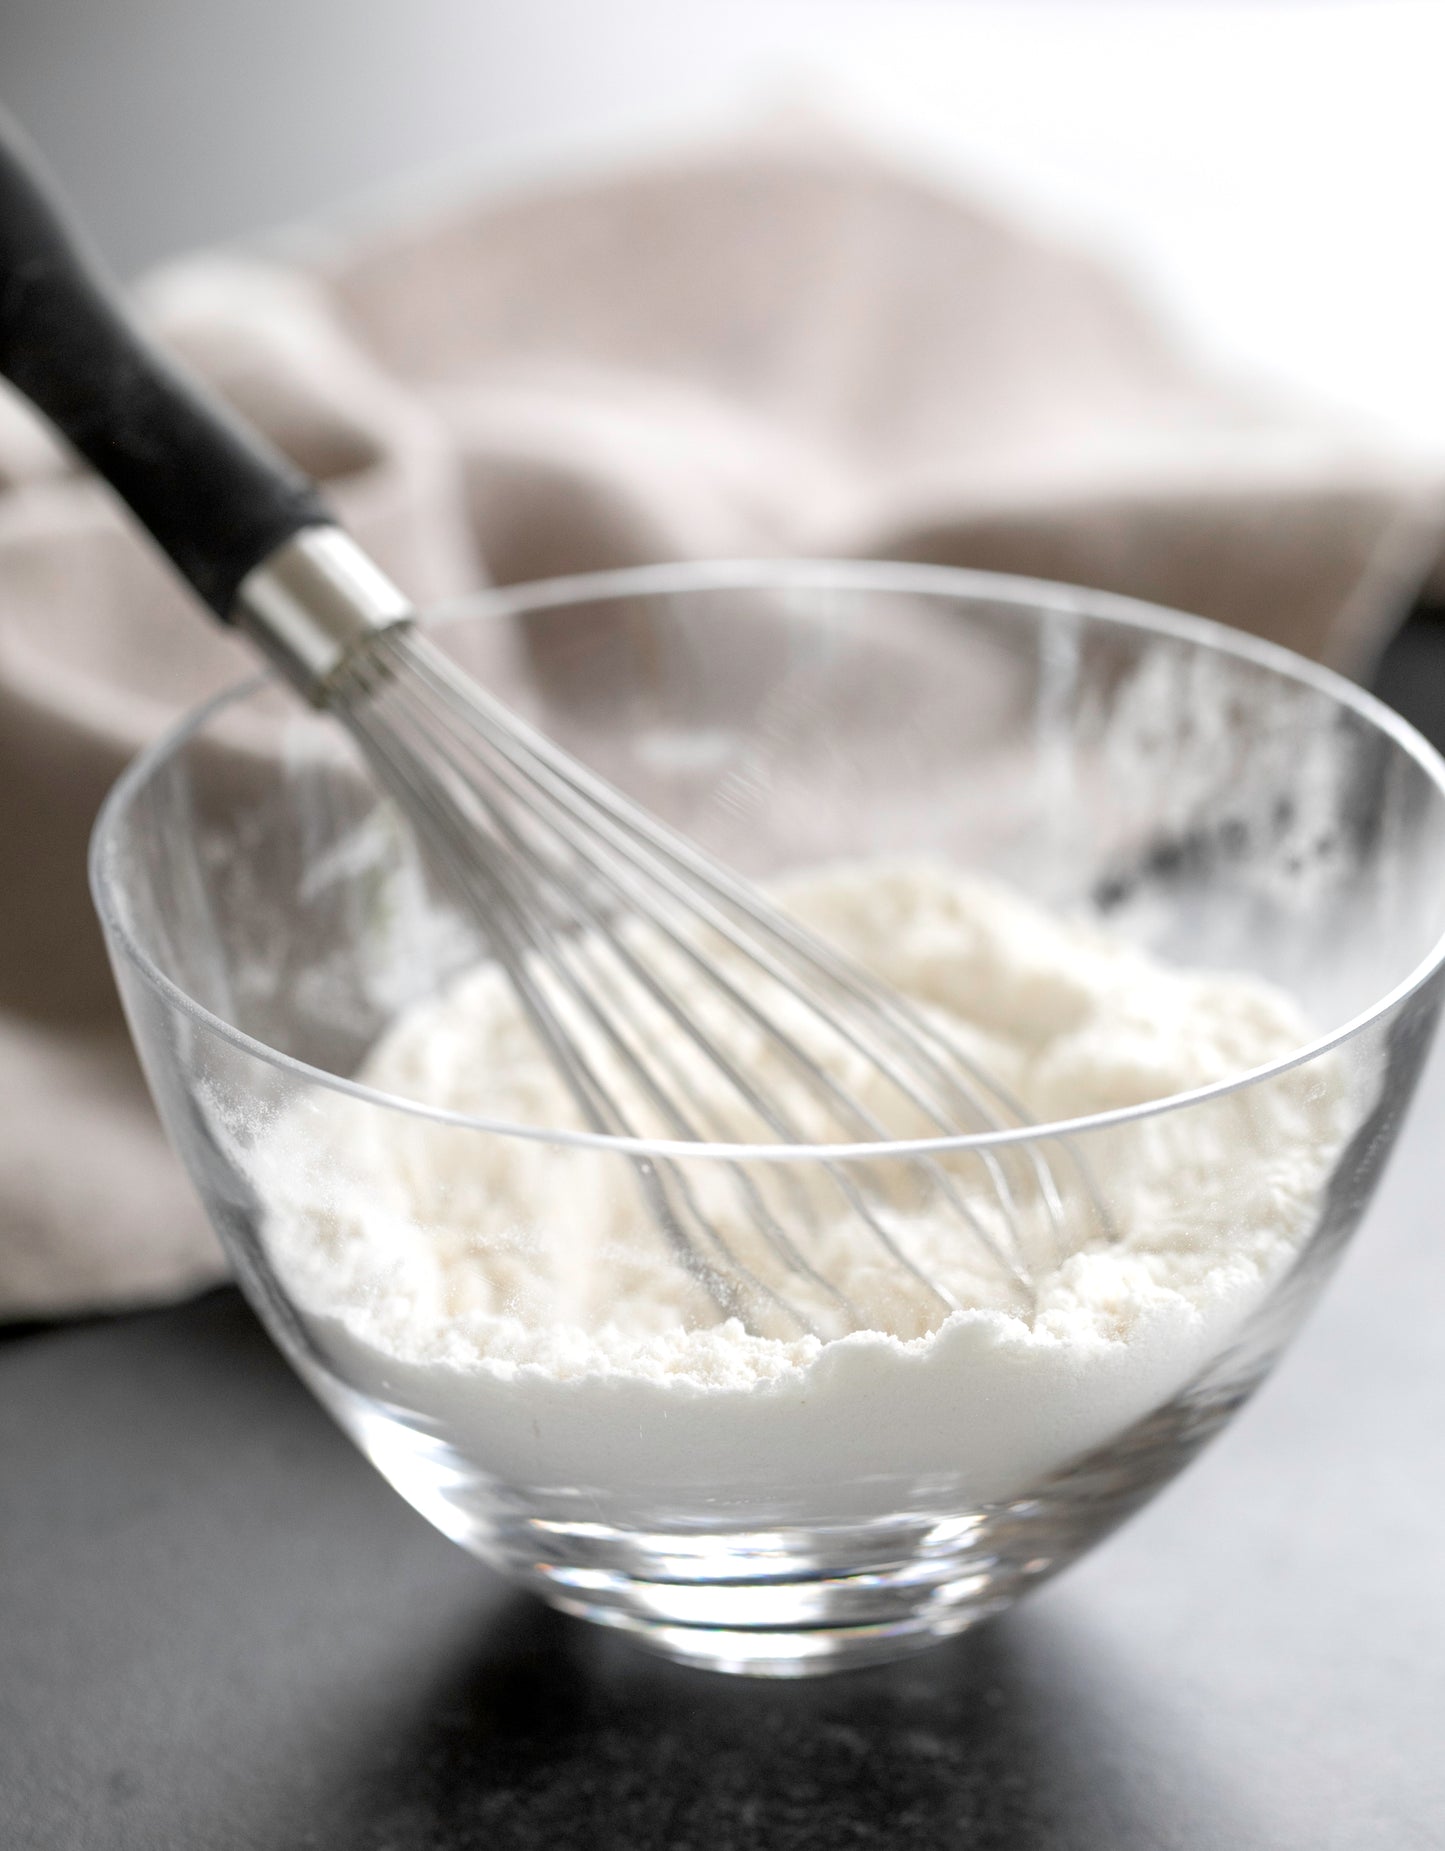 Nicole’s Best Gluten Free Multipurpose Flour